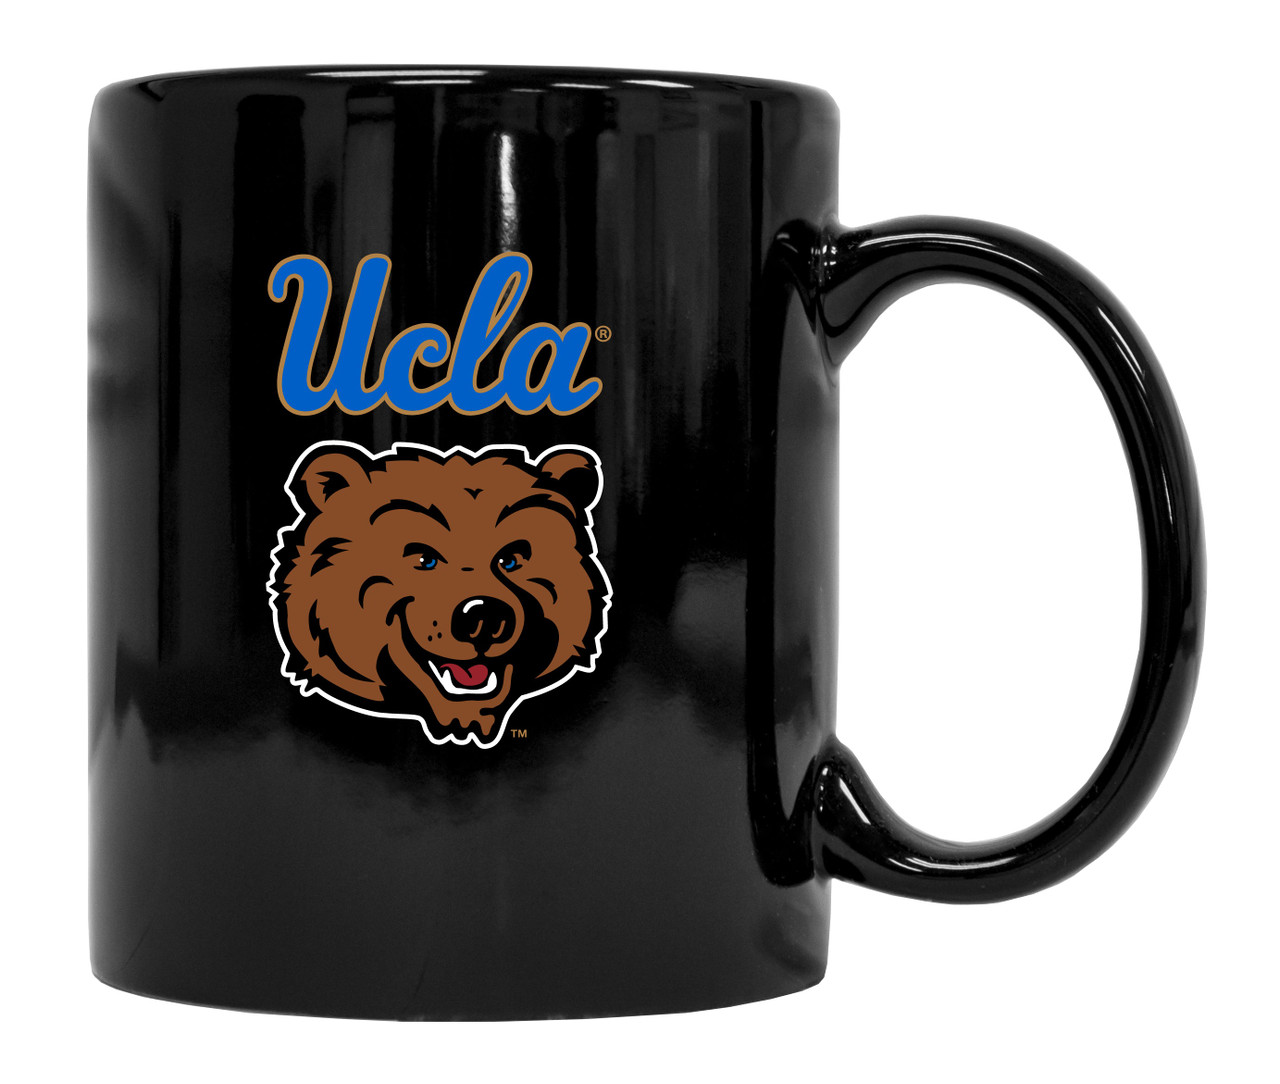 UCLA Bruins Black Ceramic Mug (Black).